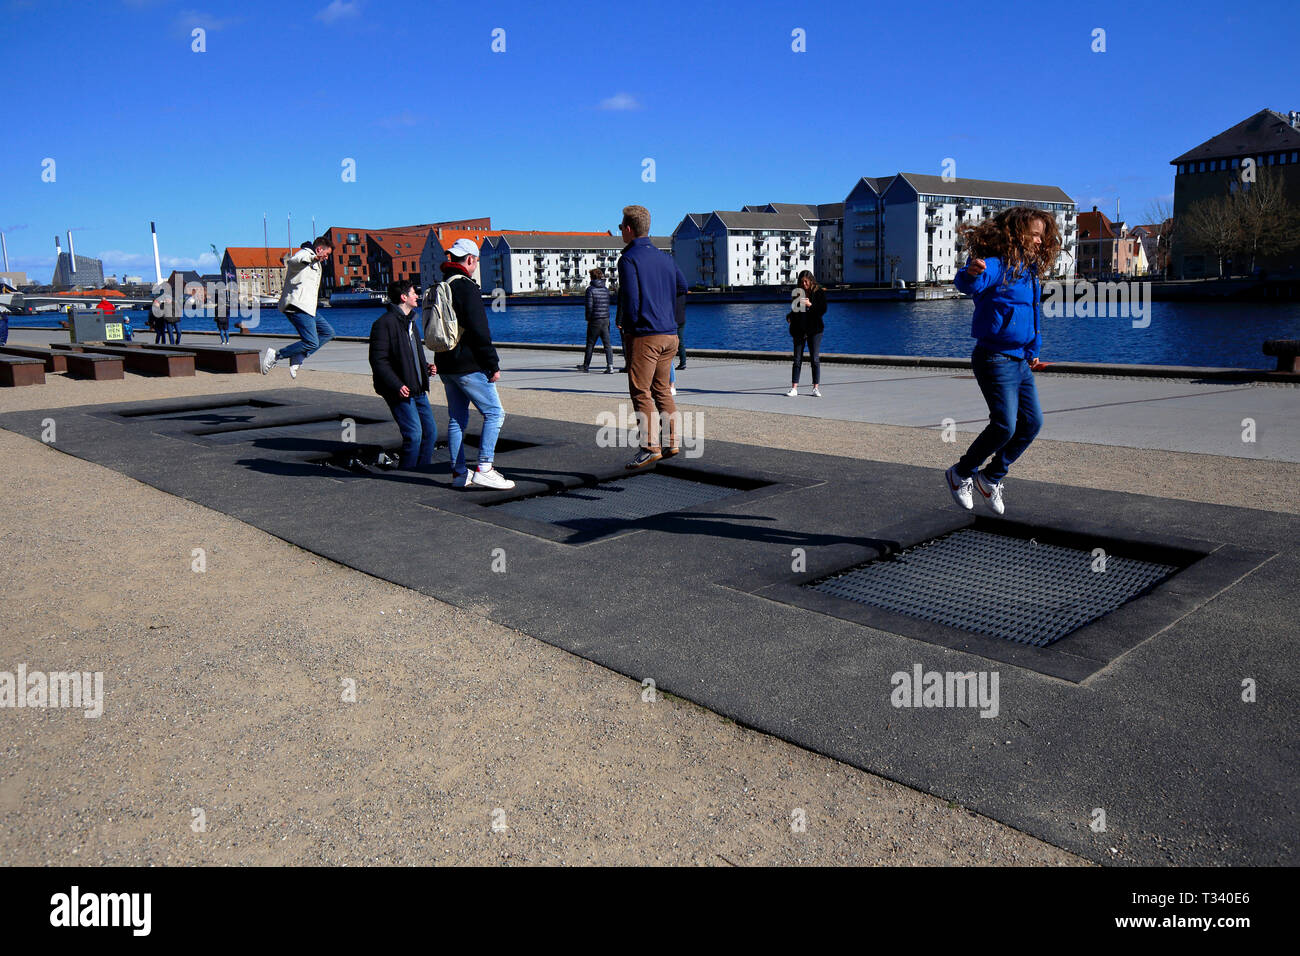 People jumping on public trampolines in Havnepromenade, Copenhagen, Denmark  Stock Photo - Alamy